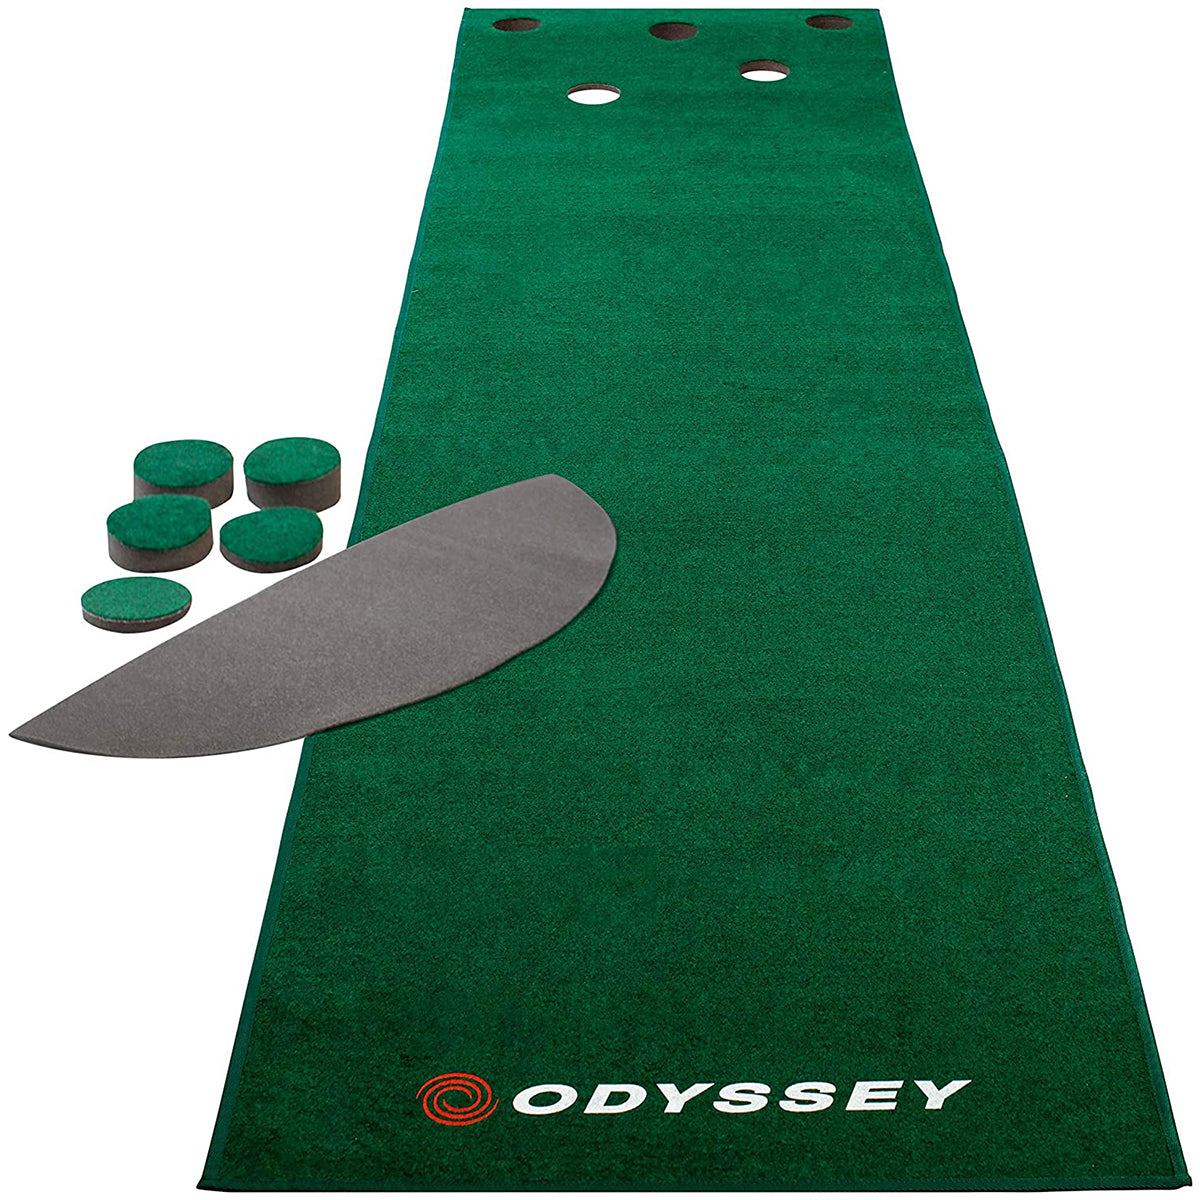 Odyssey 12' x 3' Golf Putting Mat - Green Odyssey